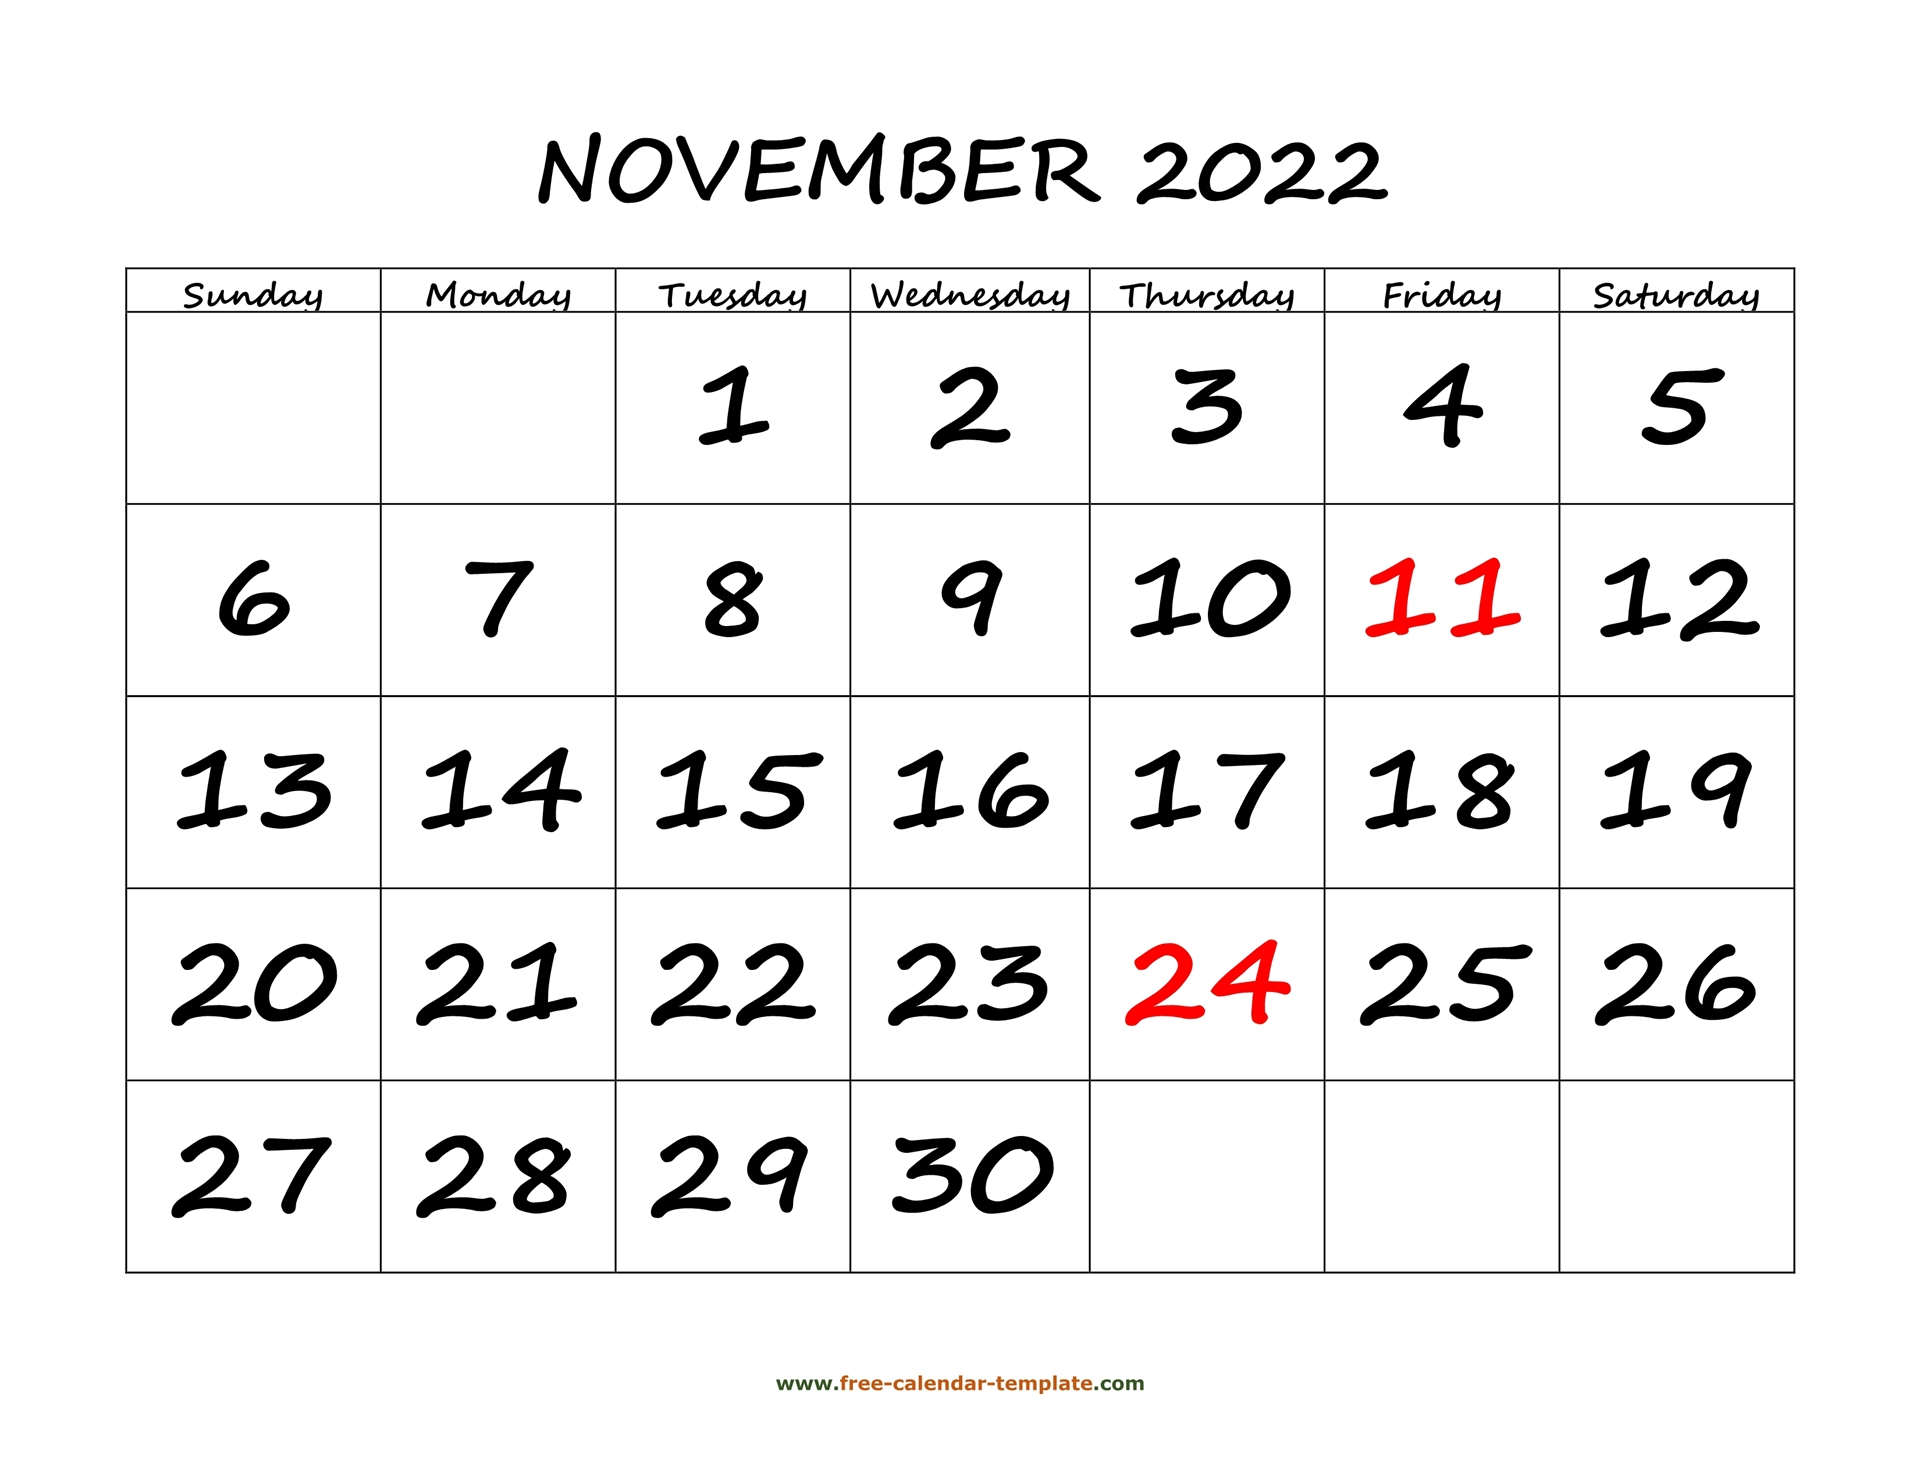 November 29 2022 Calendar | December 2022 Calendar